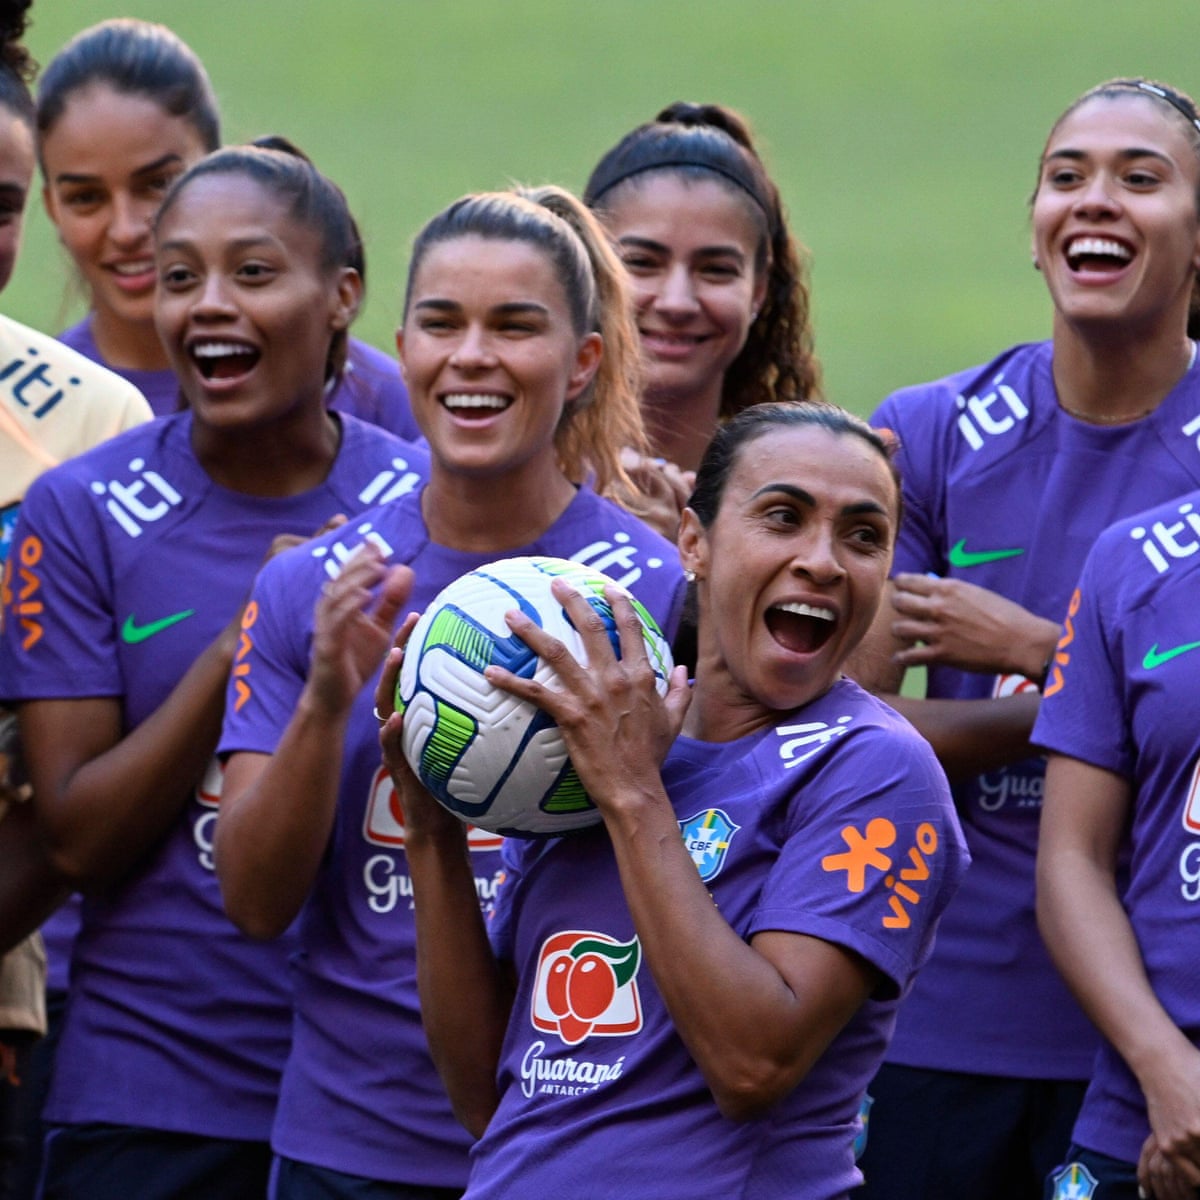 brazil football shirt ladies